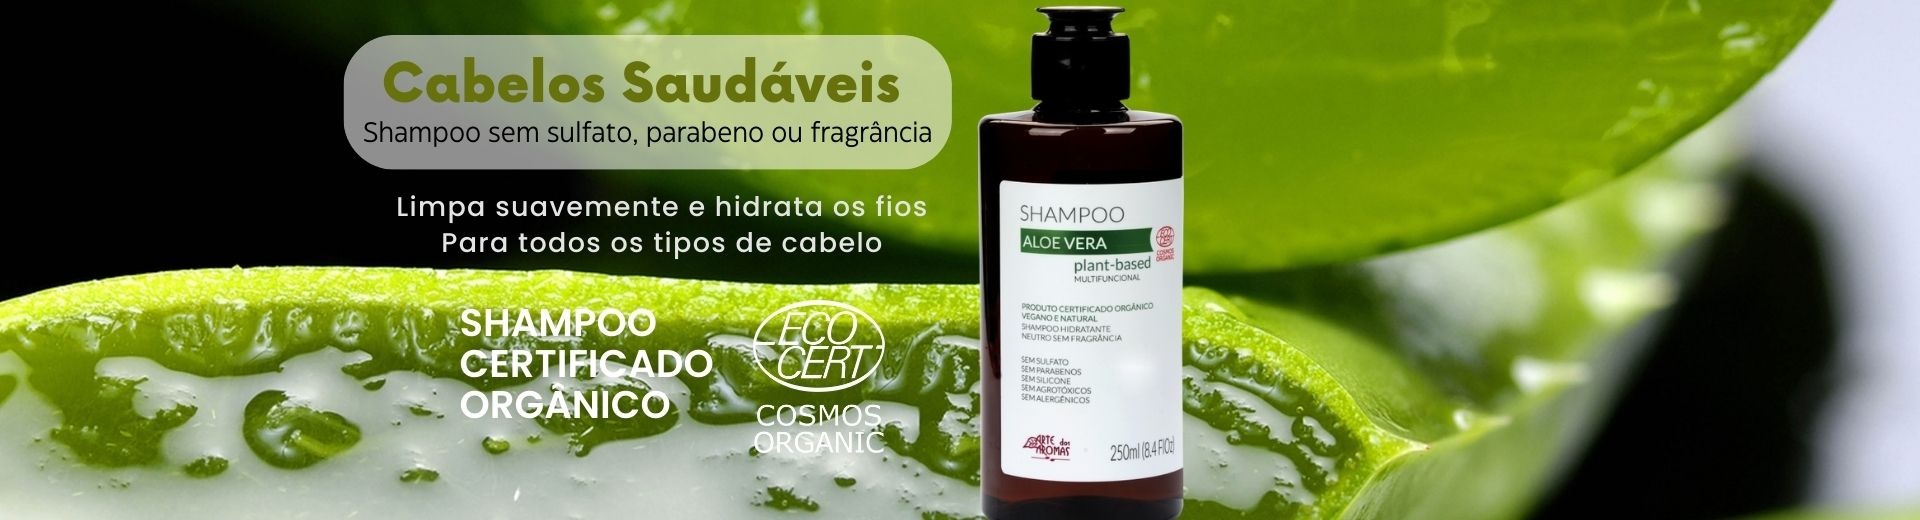 shampoo organico